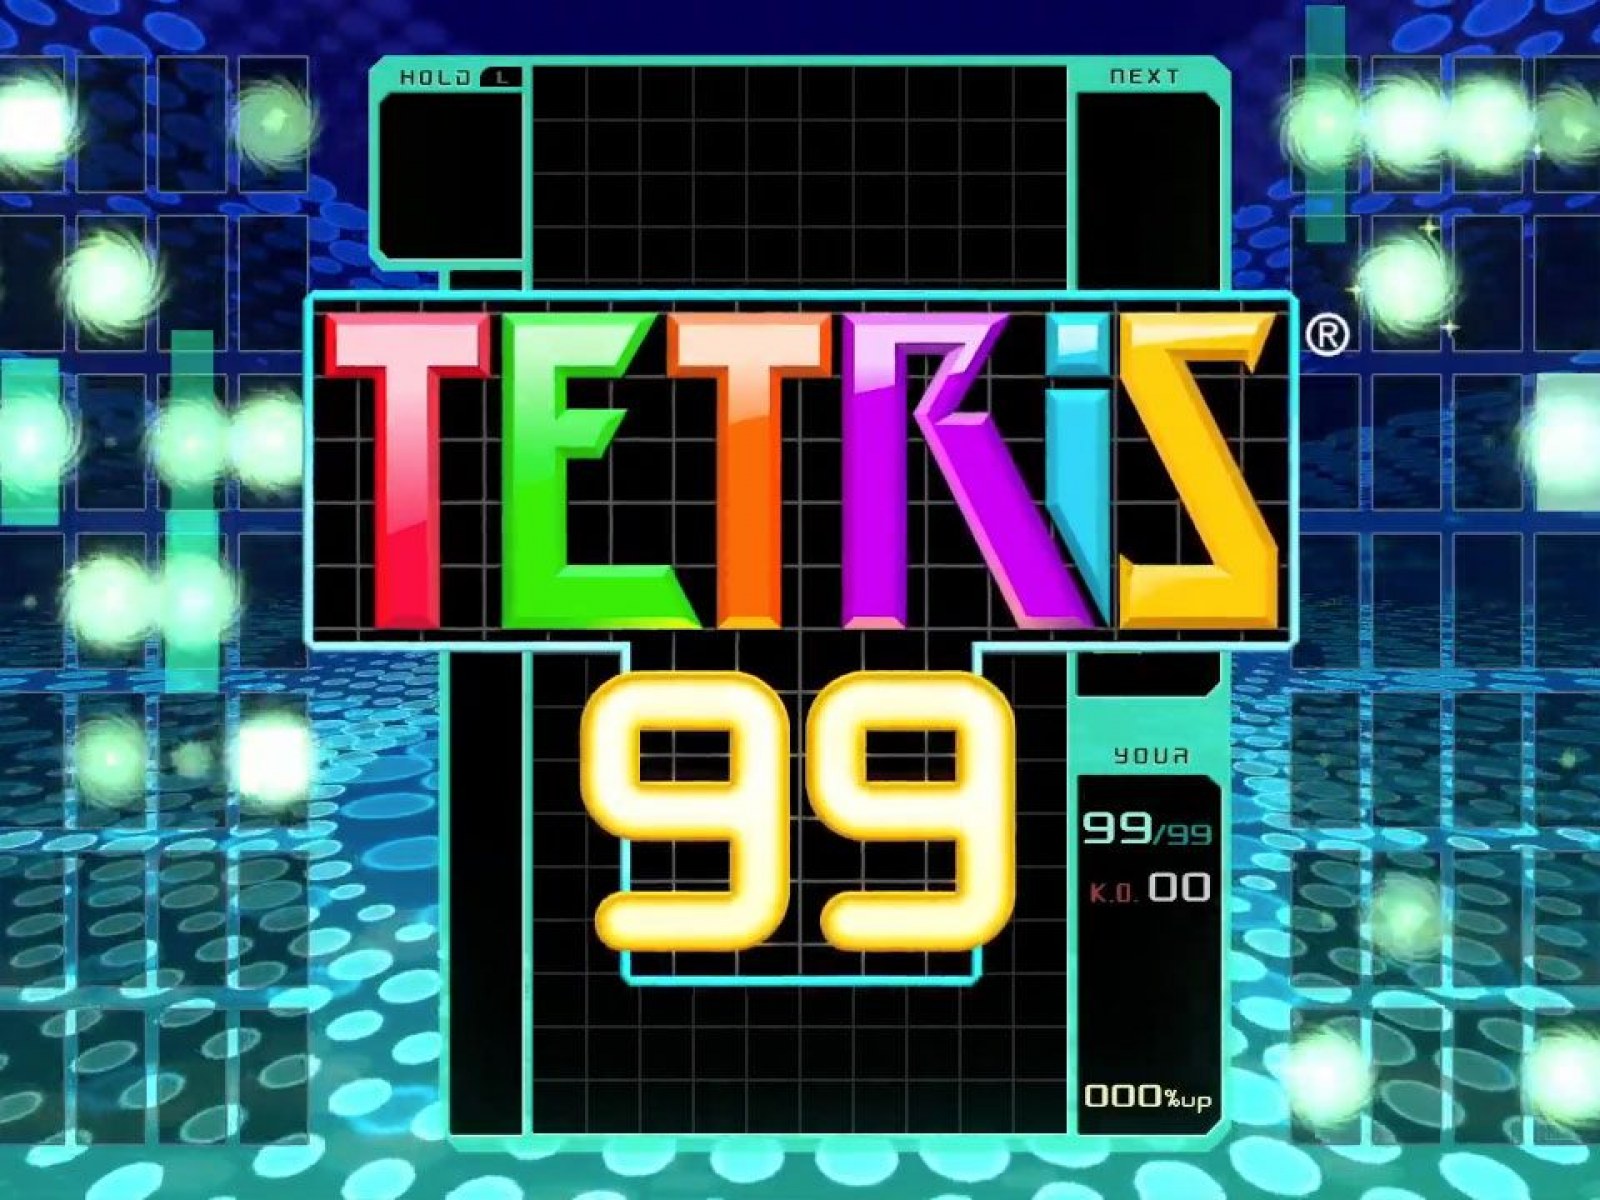 Tetris Battle Pc Game Download